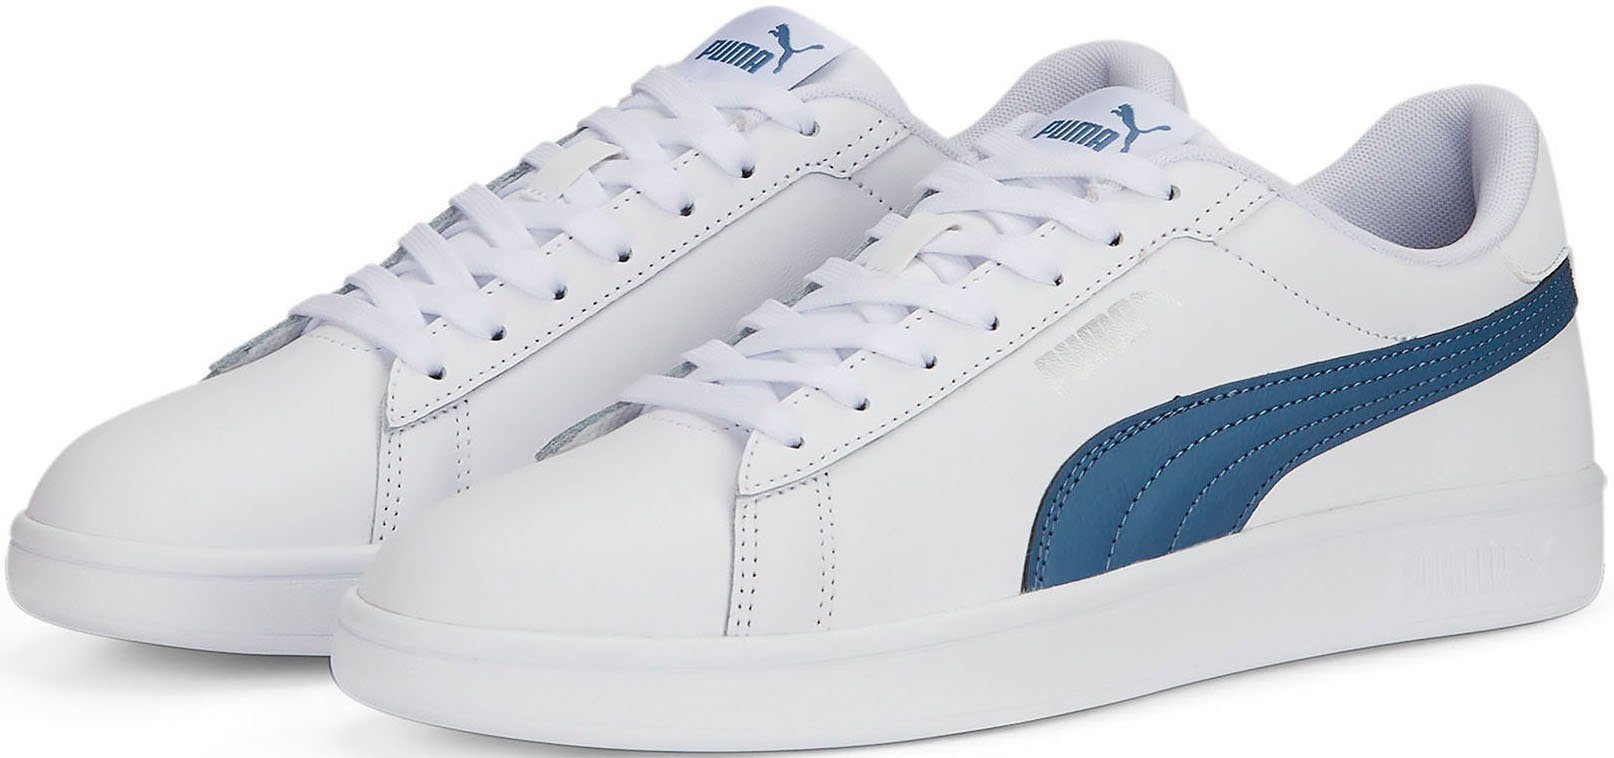 weiß-blau 3.0 Puma Sneaker PUMA Smash L